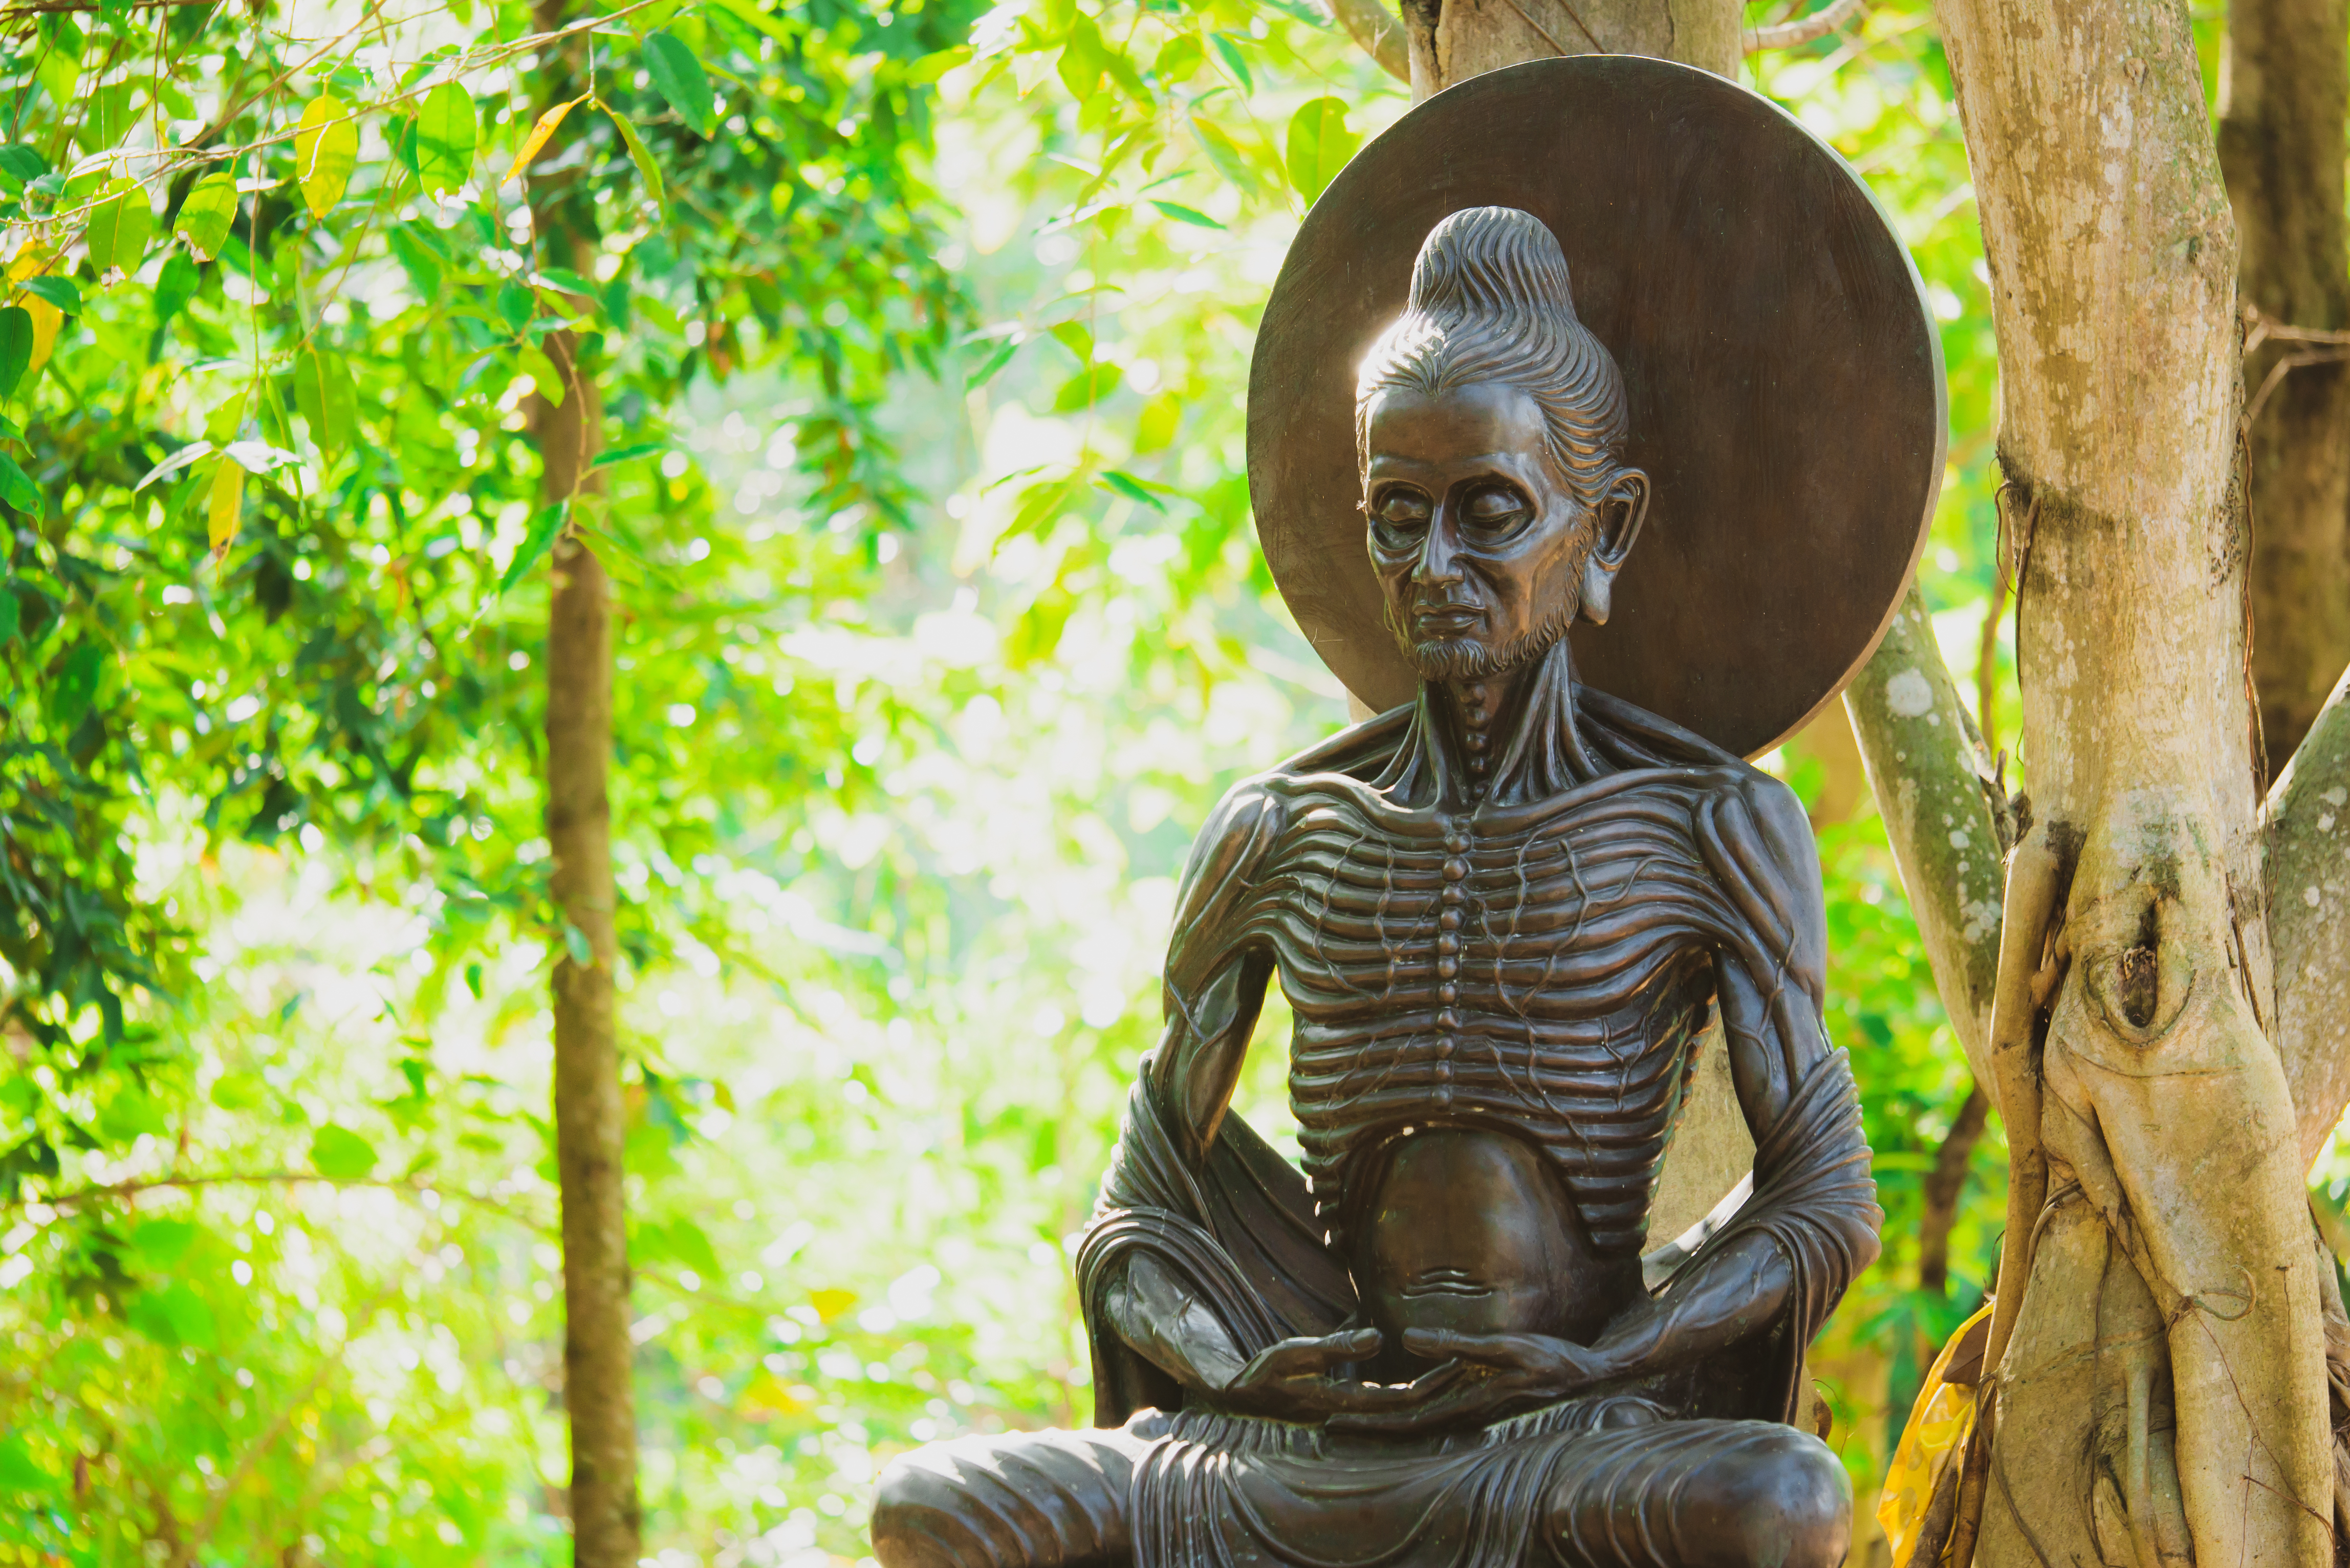 Buddhist statue representing suffering